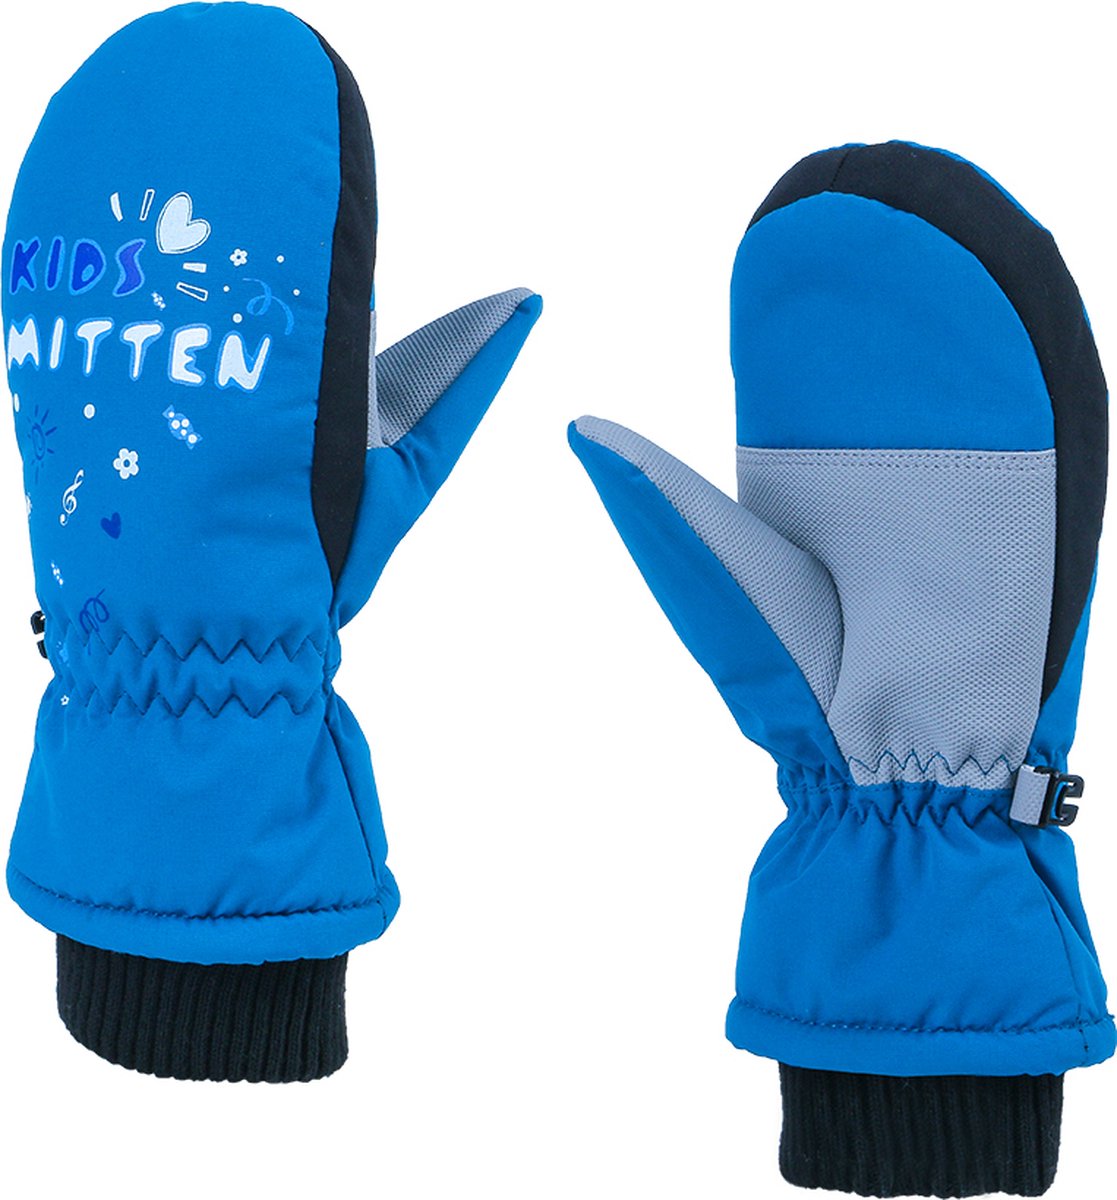 Waterafstotende Skiwanten / Handschoenen - Sleeën/Skiën/Snowboarden